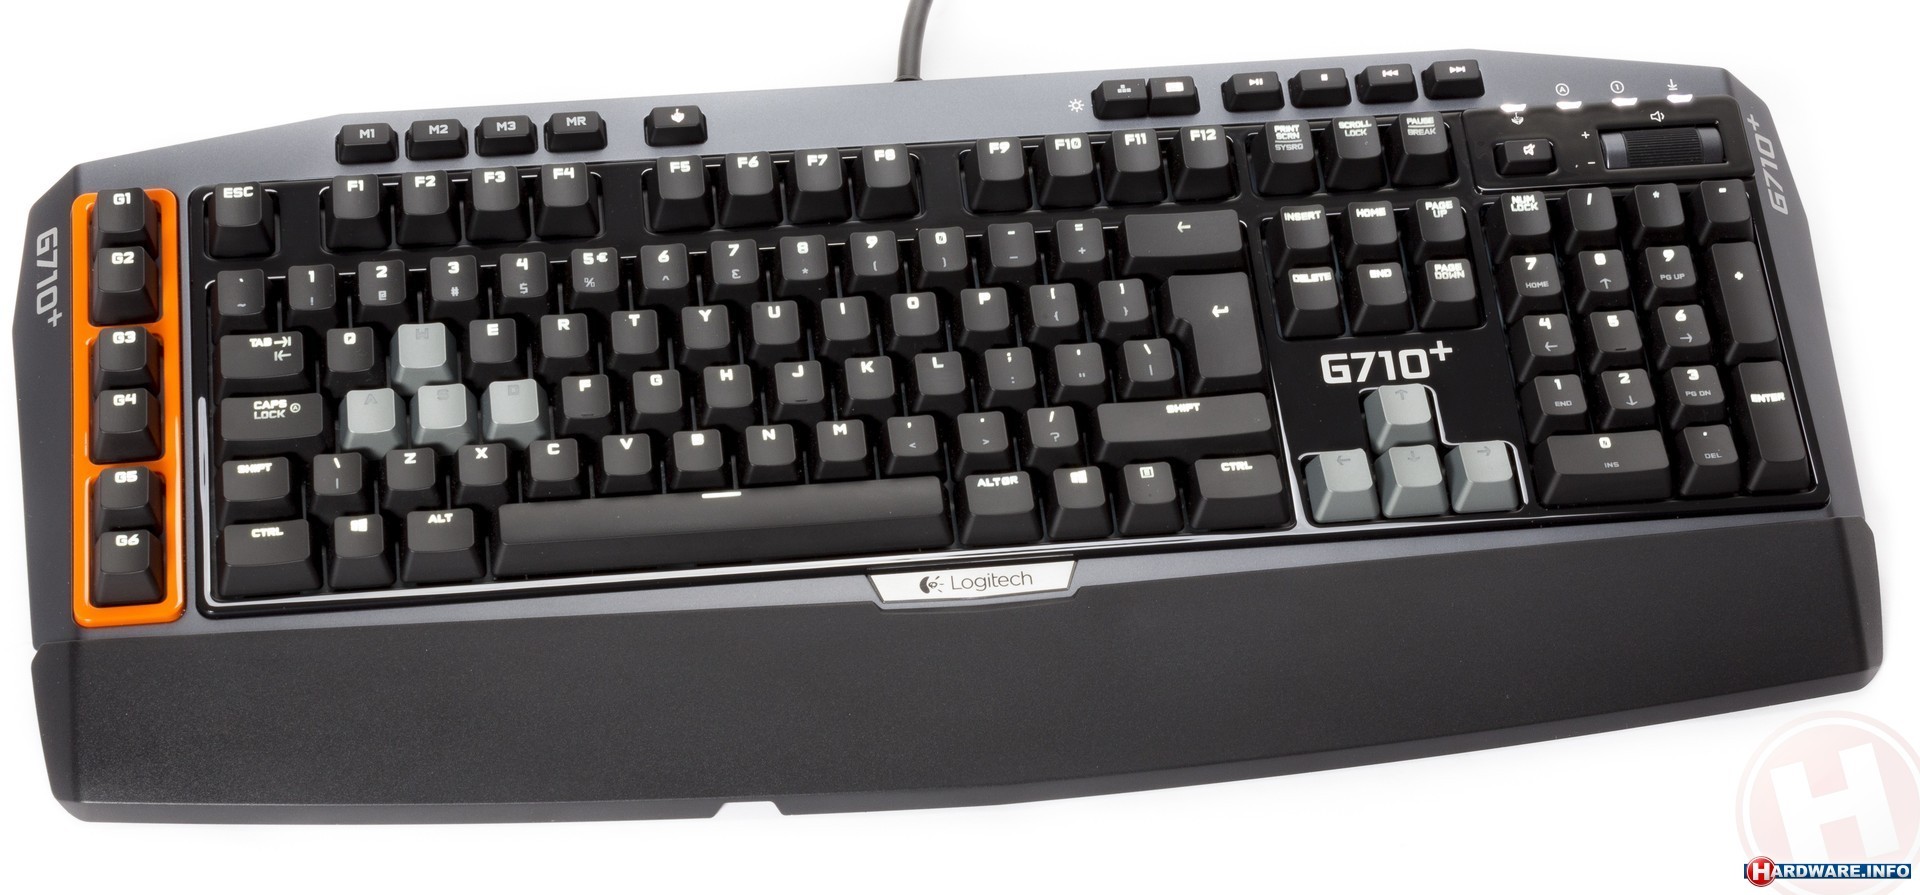 leven De volgende Geniet Logitech G710+ Mechanical Gaming Keyboard toetsenbord - Hardware Info